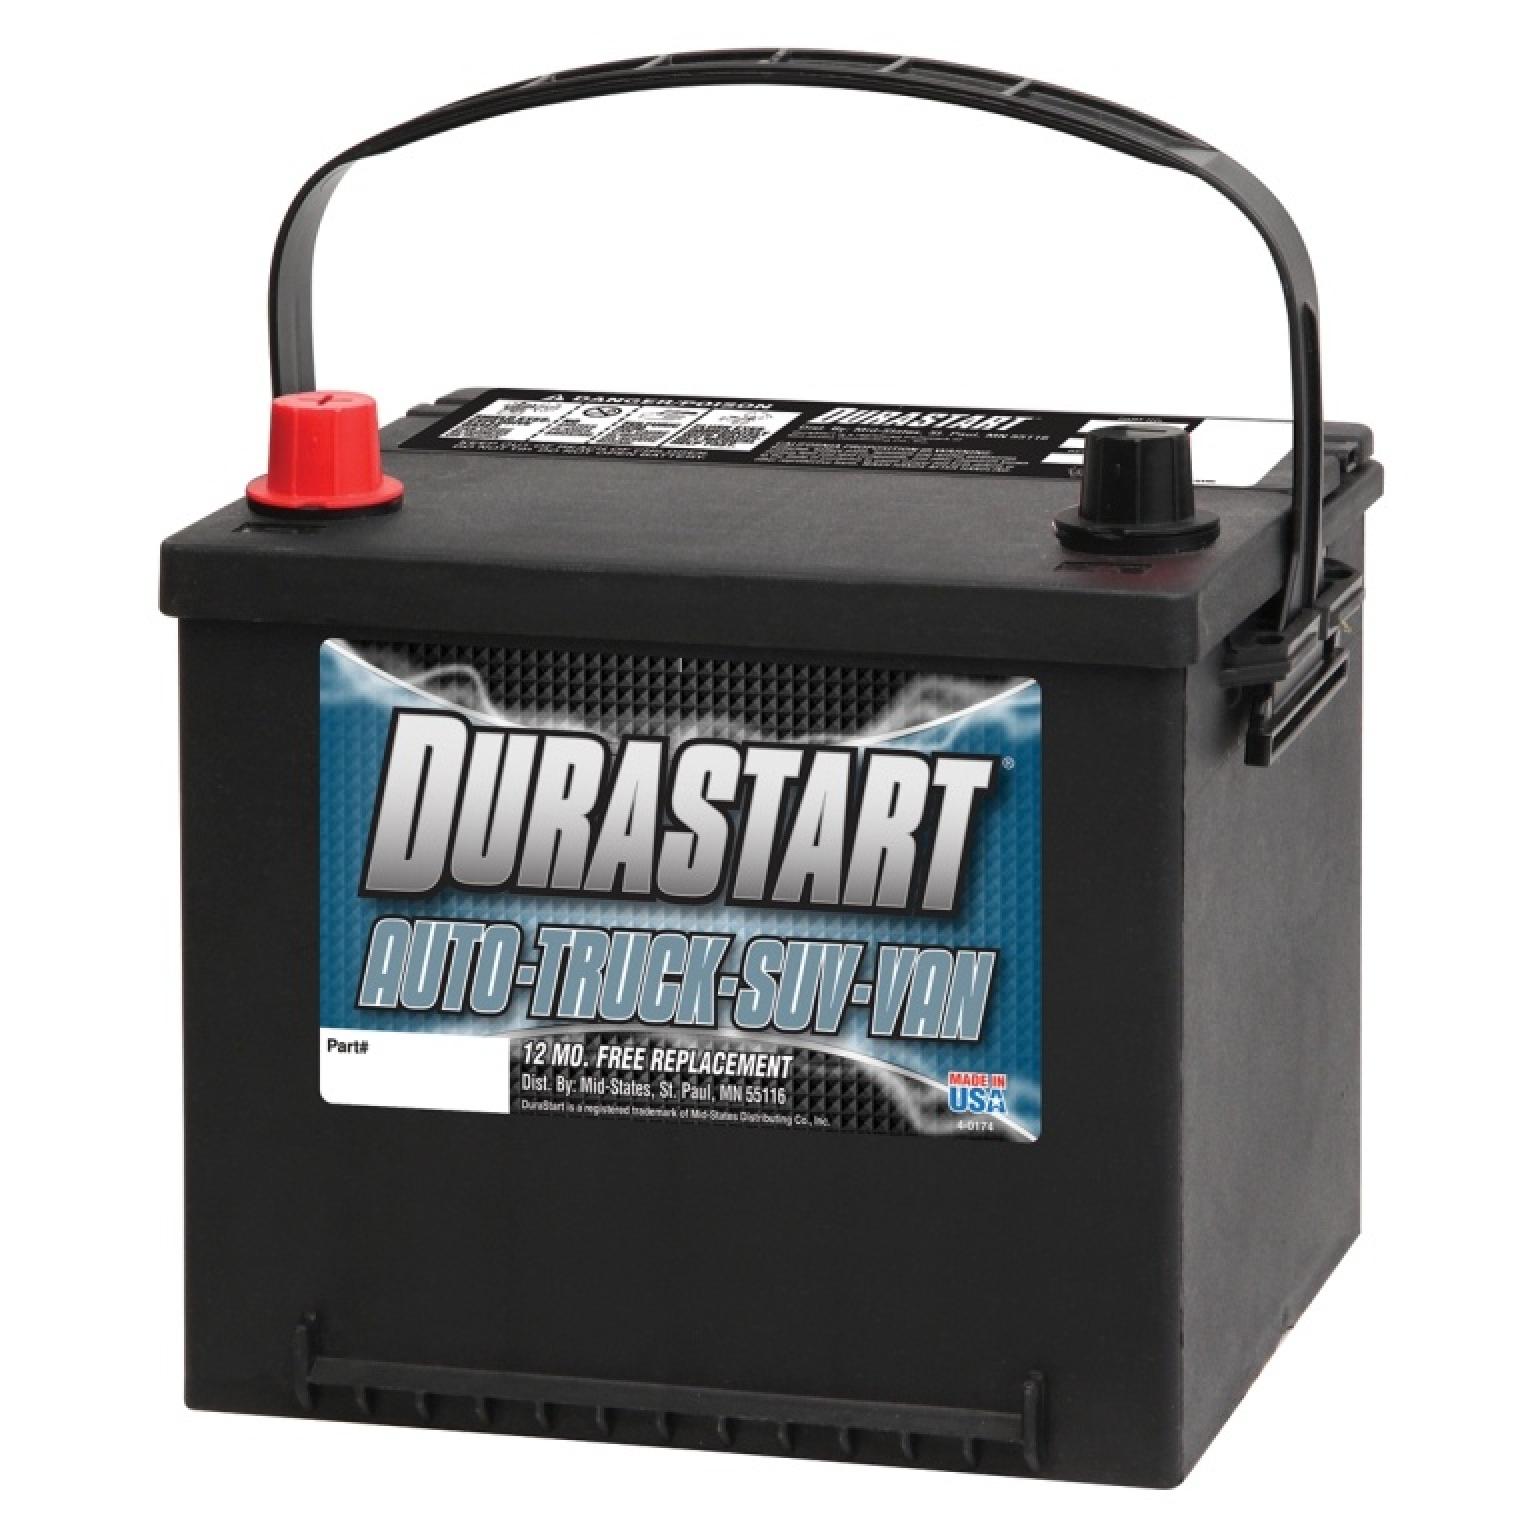 Durastart Automotive Battery 26A-2